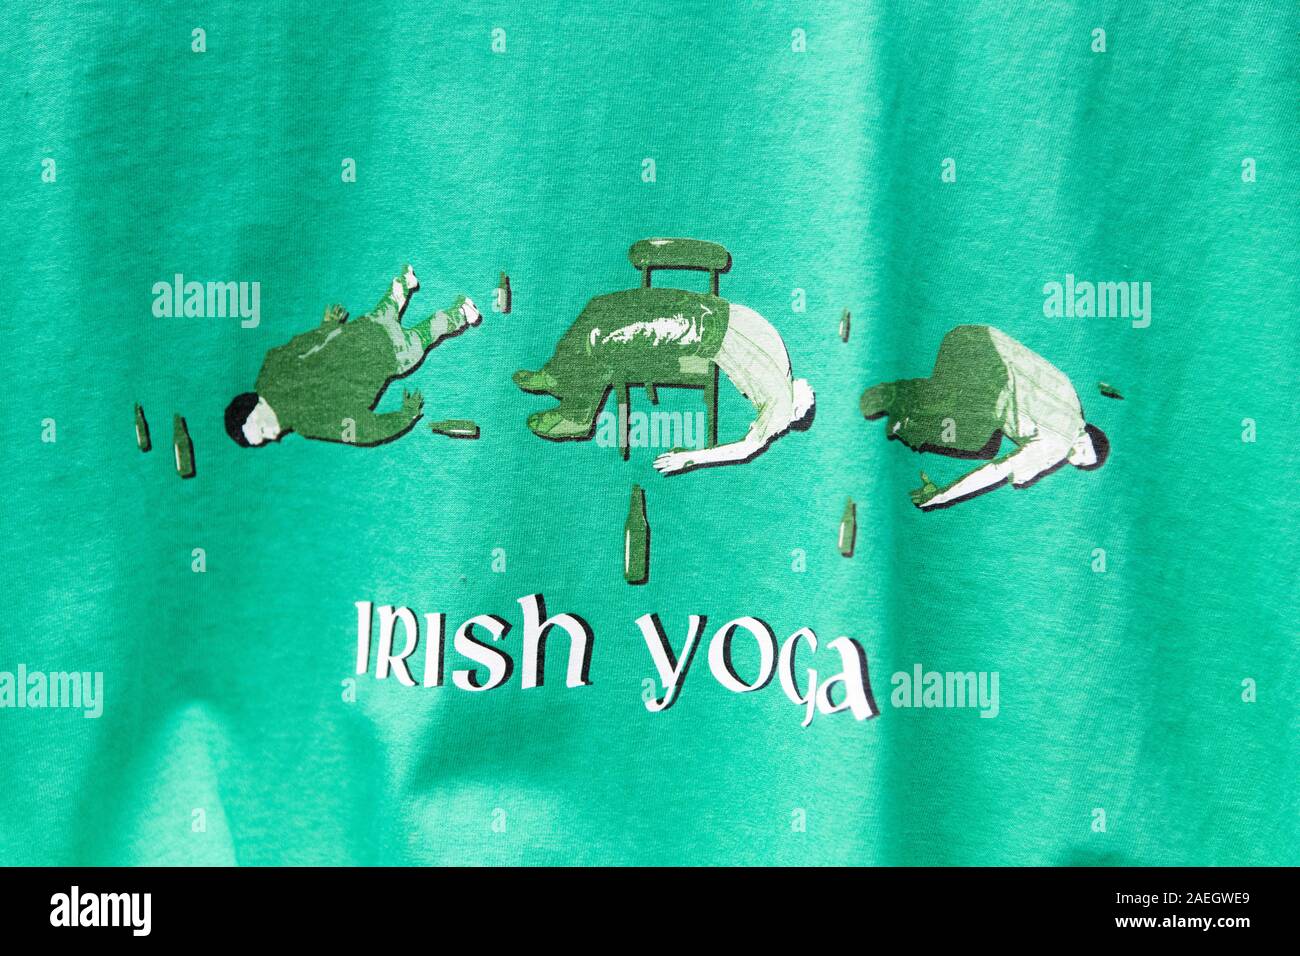 Irish yoga hi-res stock photography and images - Alamy